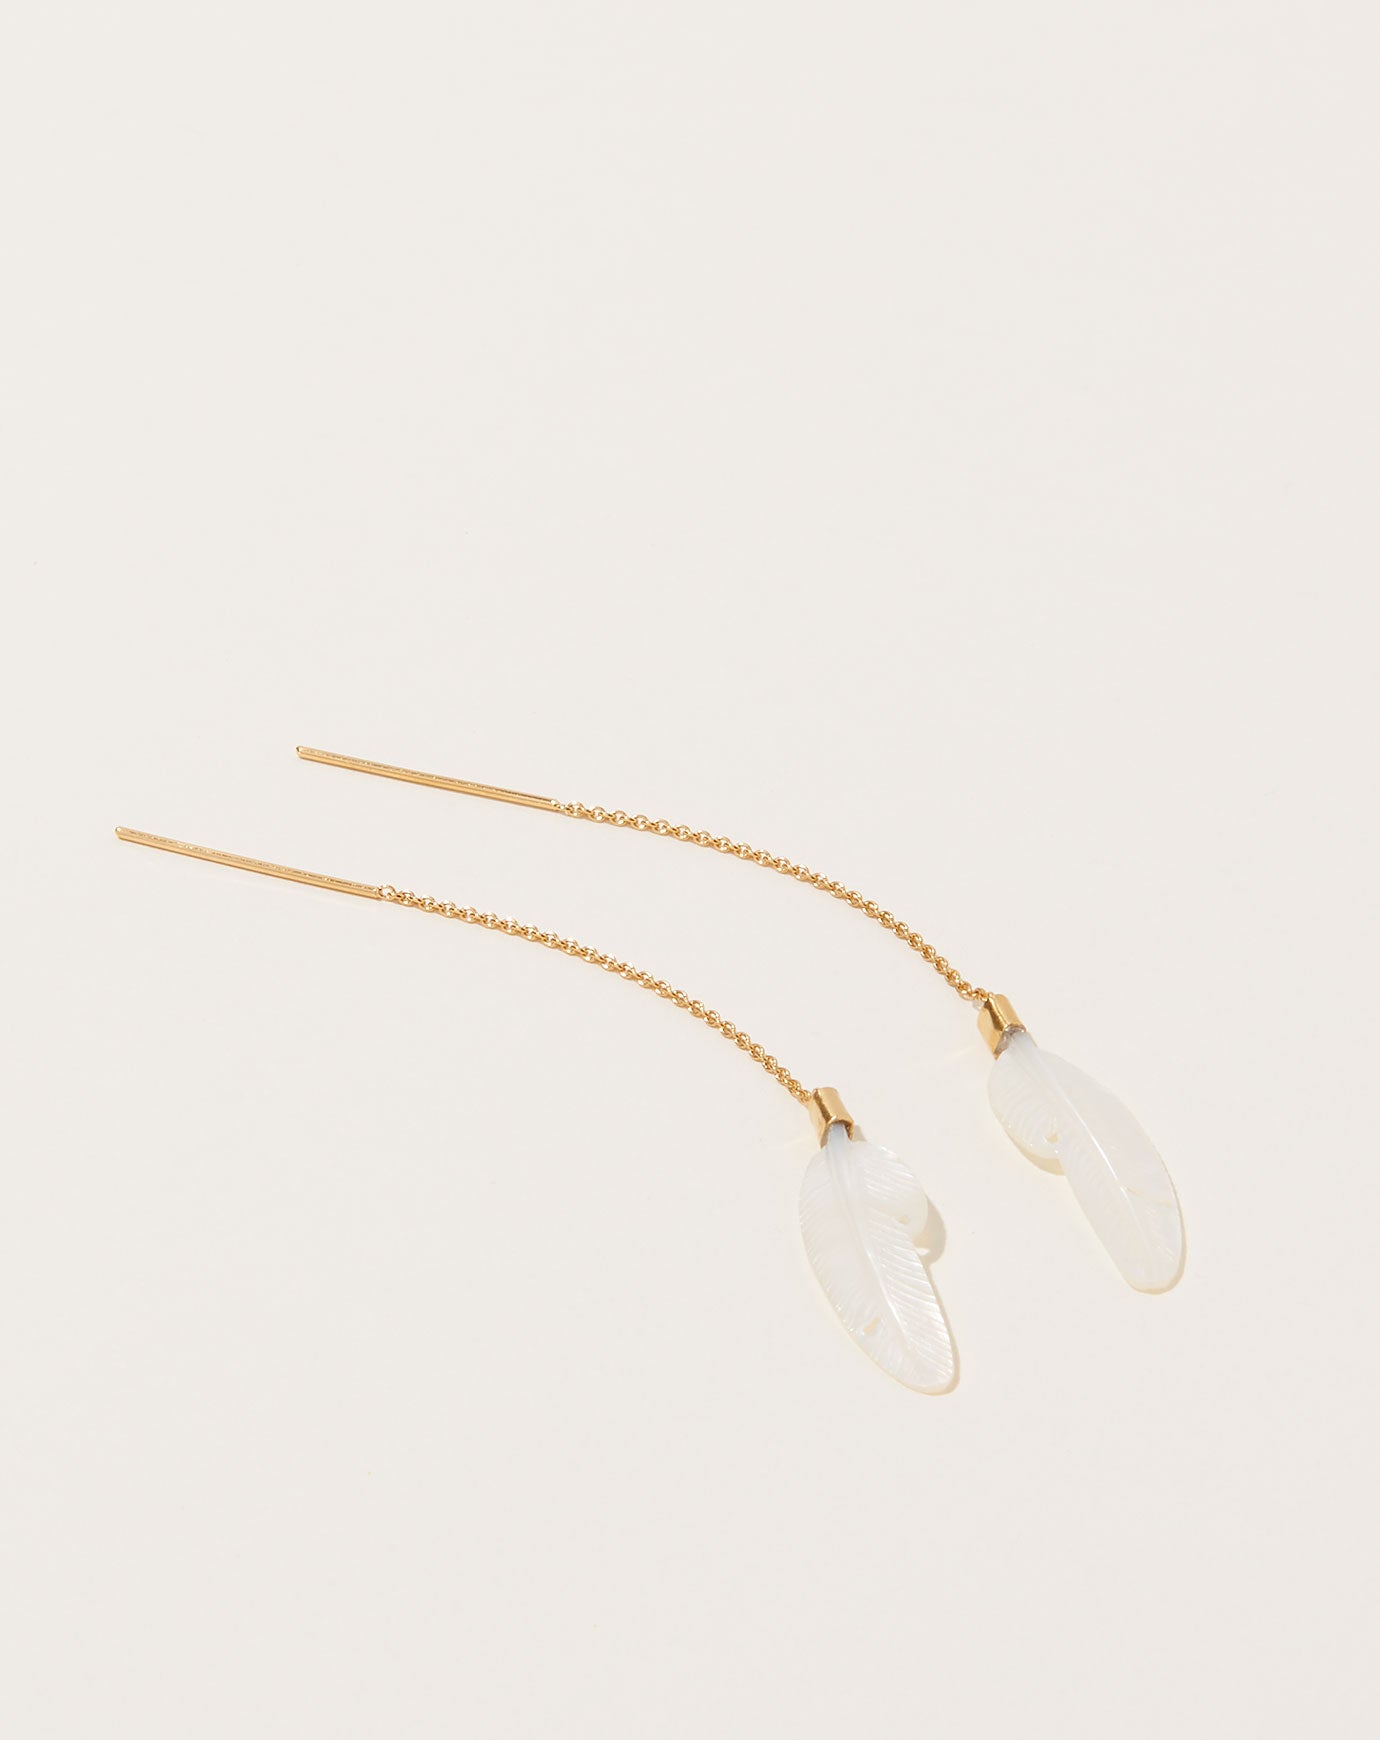 Grainne Morton Feather Thread Through Earrings